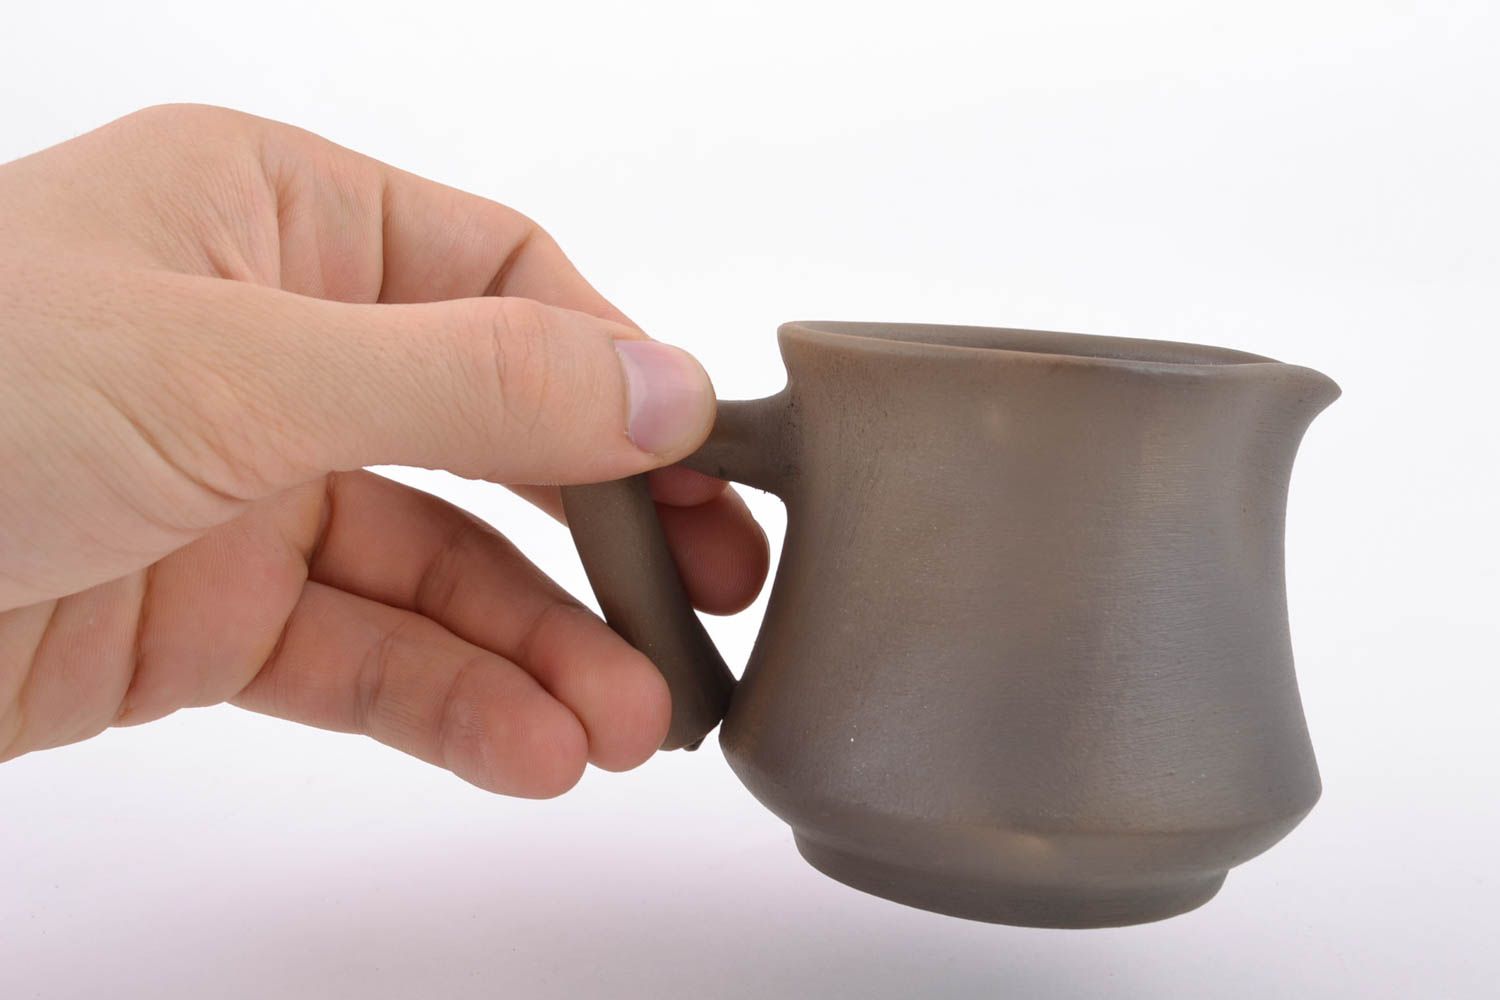 10 oz ceramic handmade creamer pitcher in brown color 0,41 lb photo 3